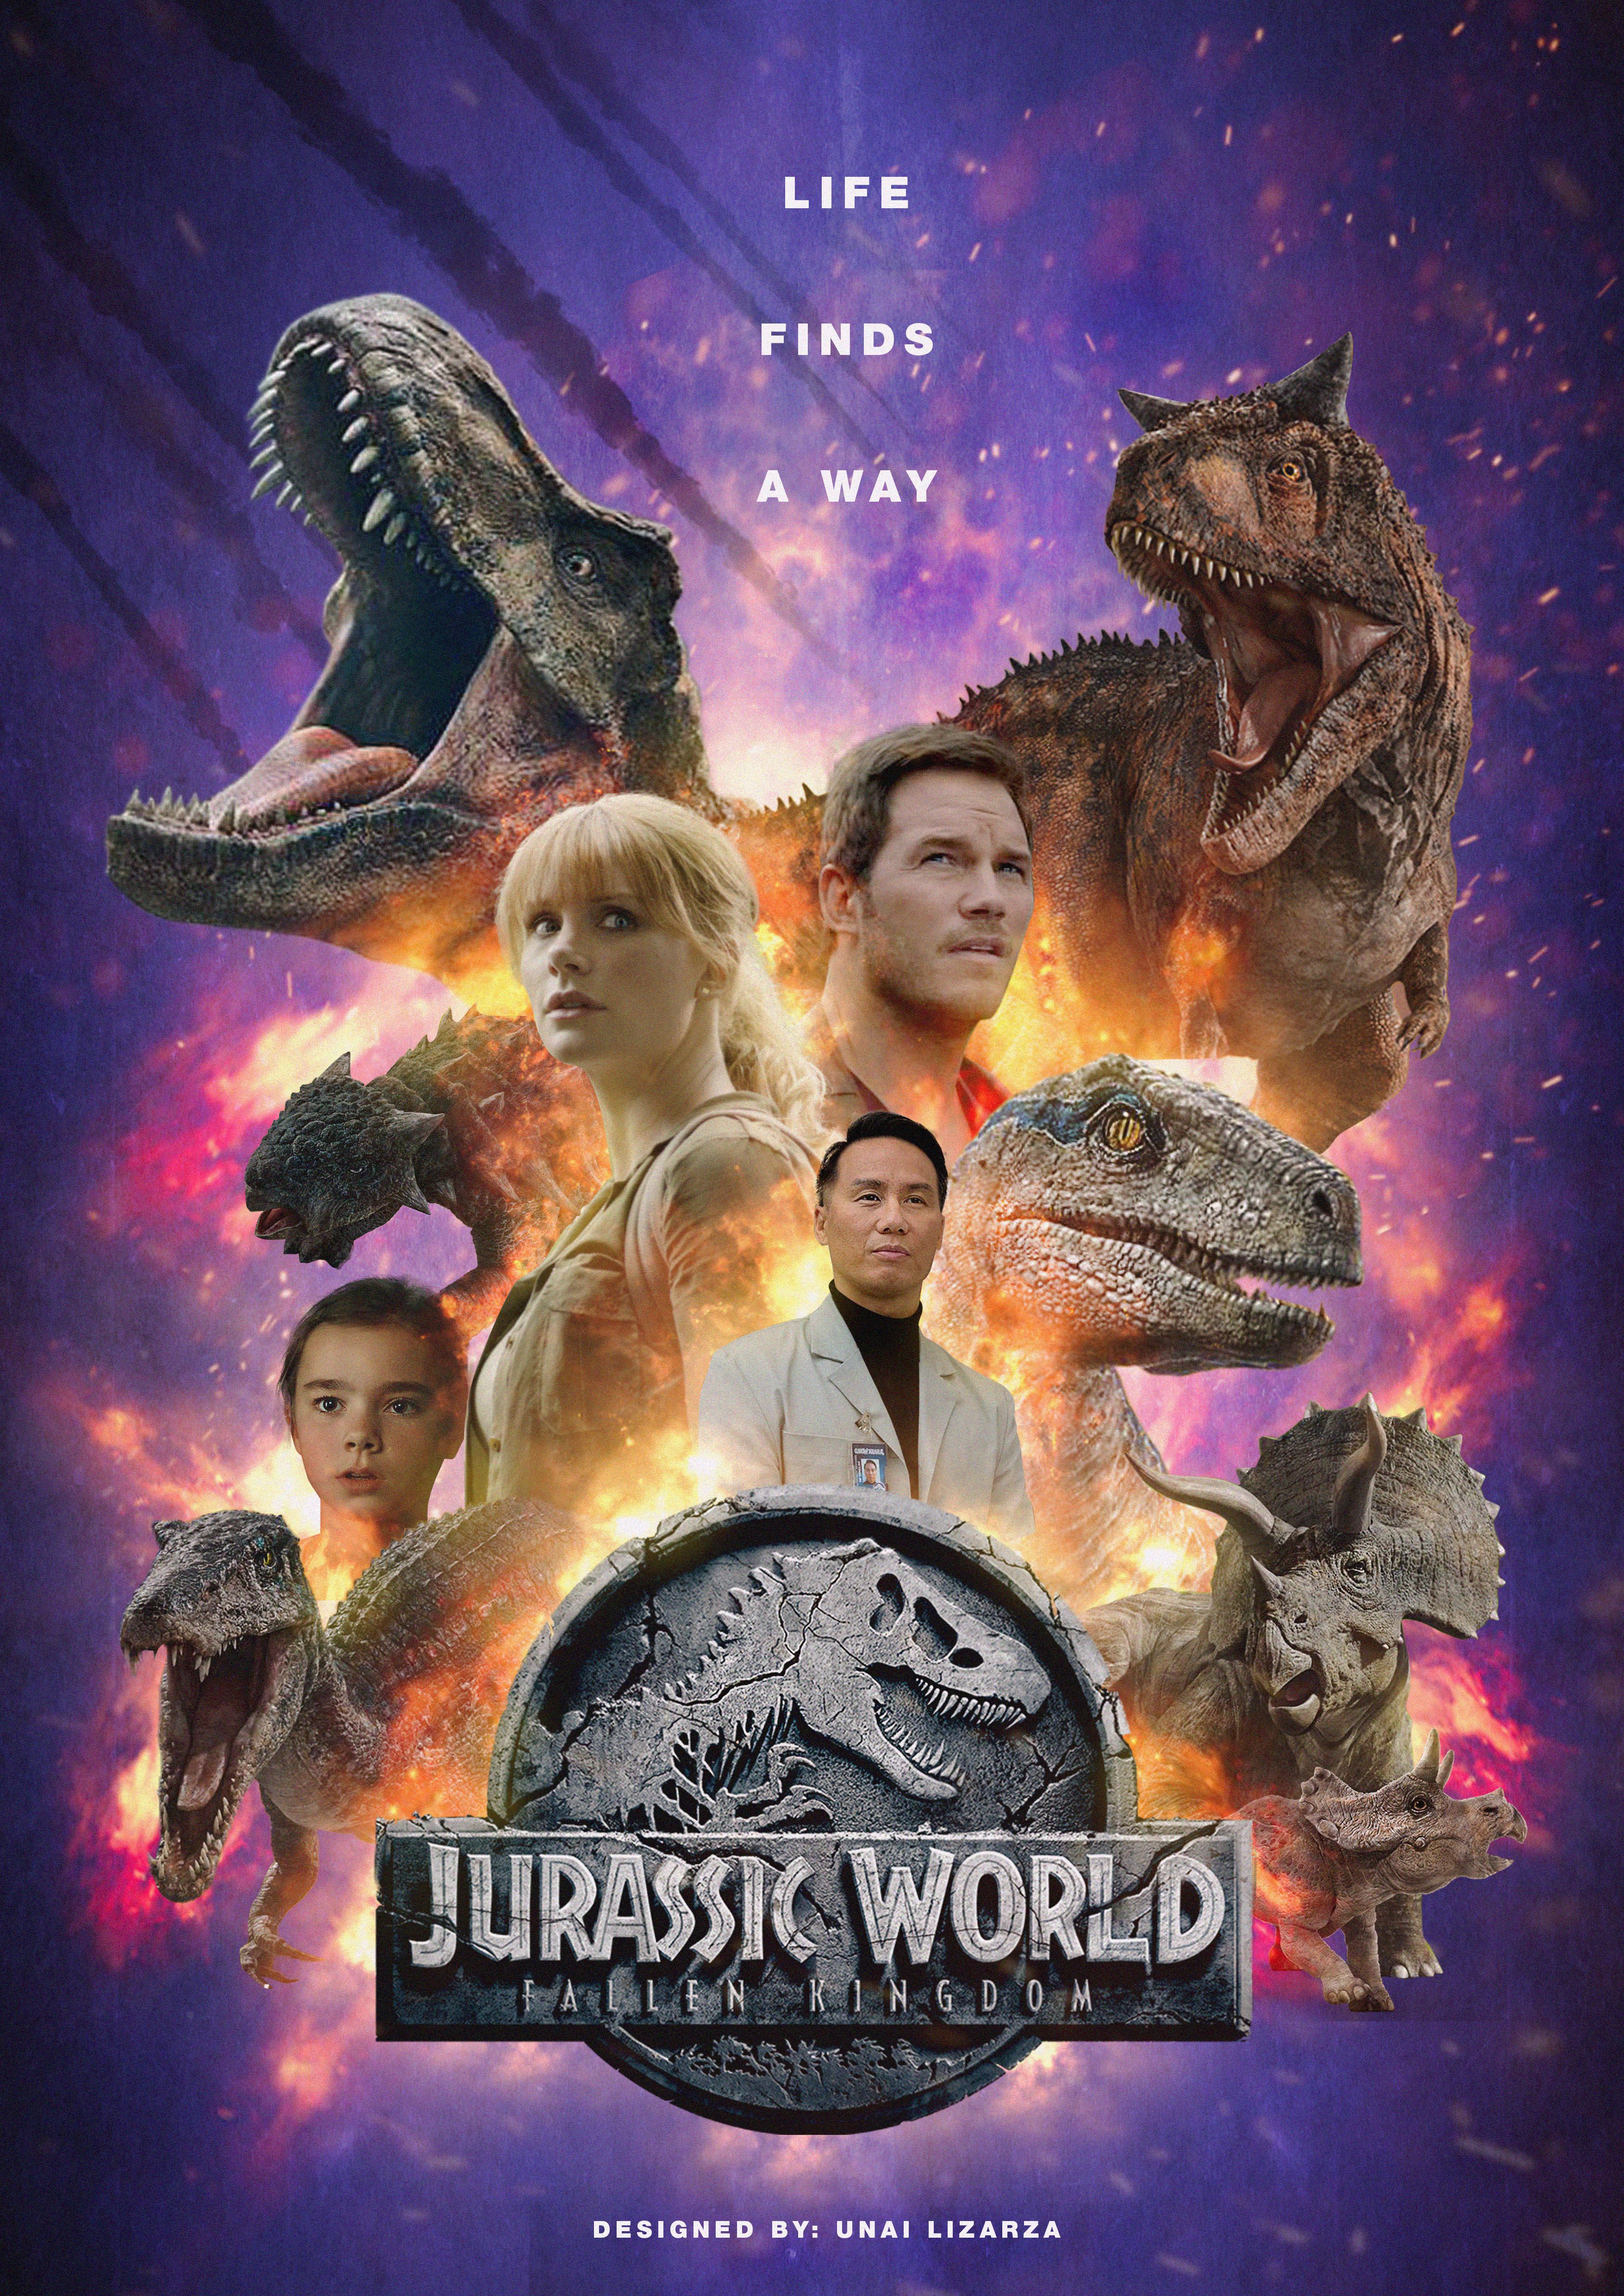 Jurassic world Fallen Kingdom poster created by Unai Lizarza. Jurassic world, Jurassic world movie, Jurassic world dinosaurs